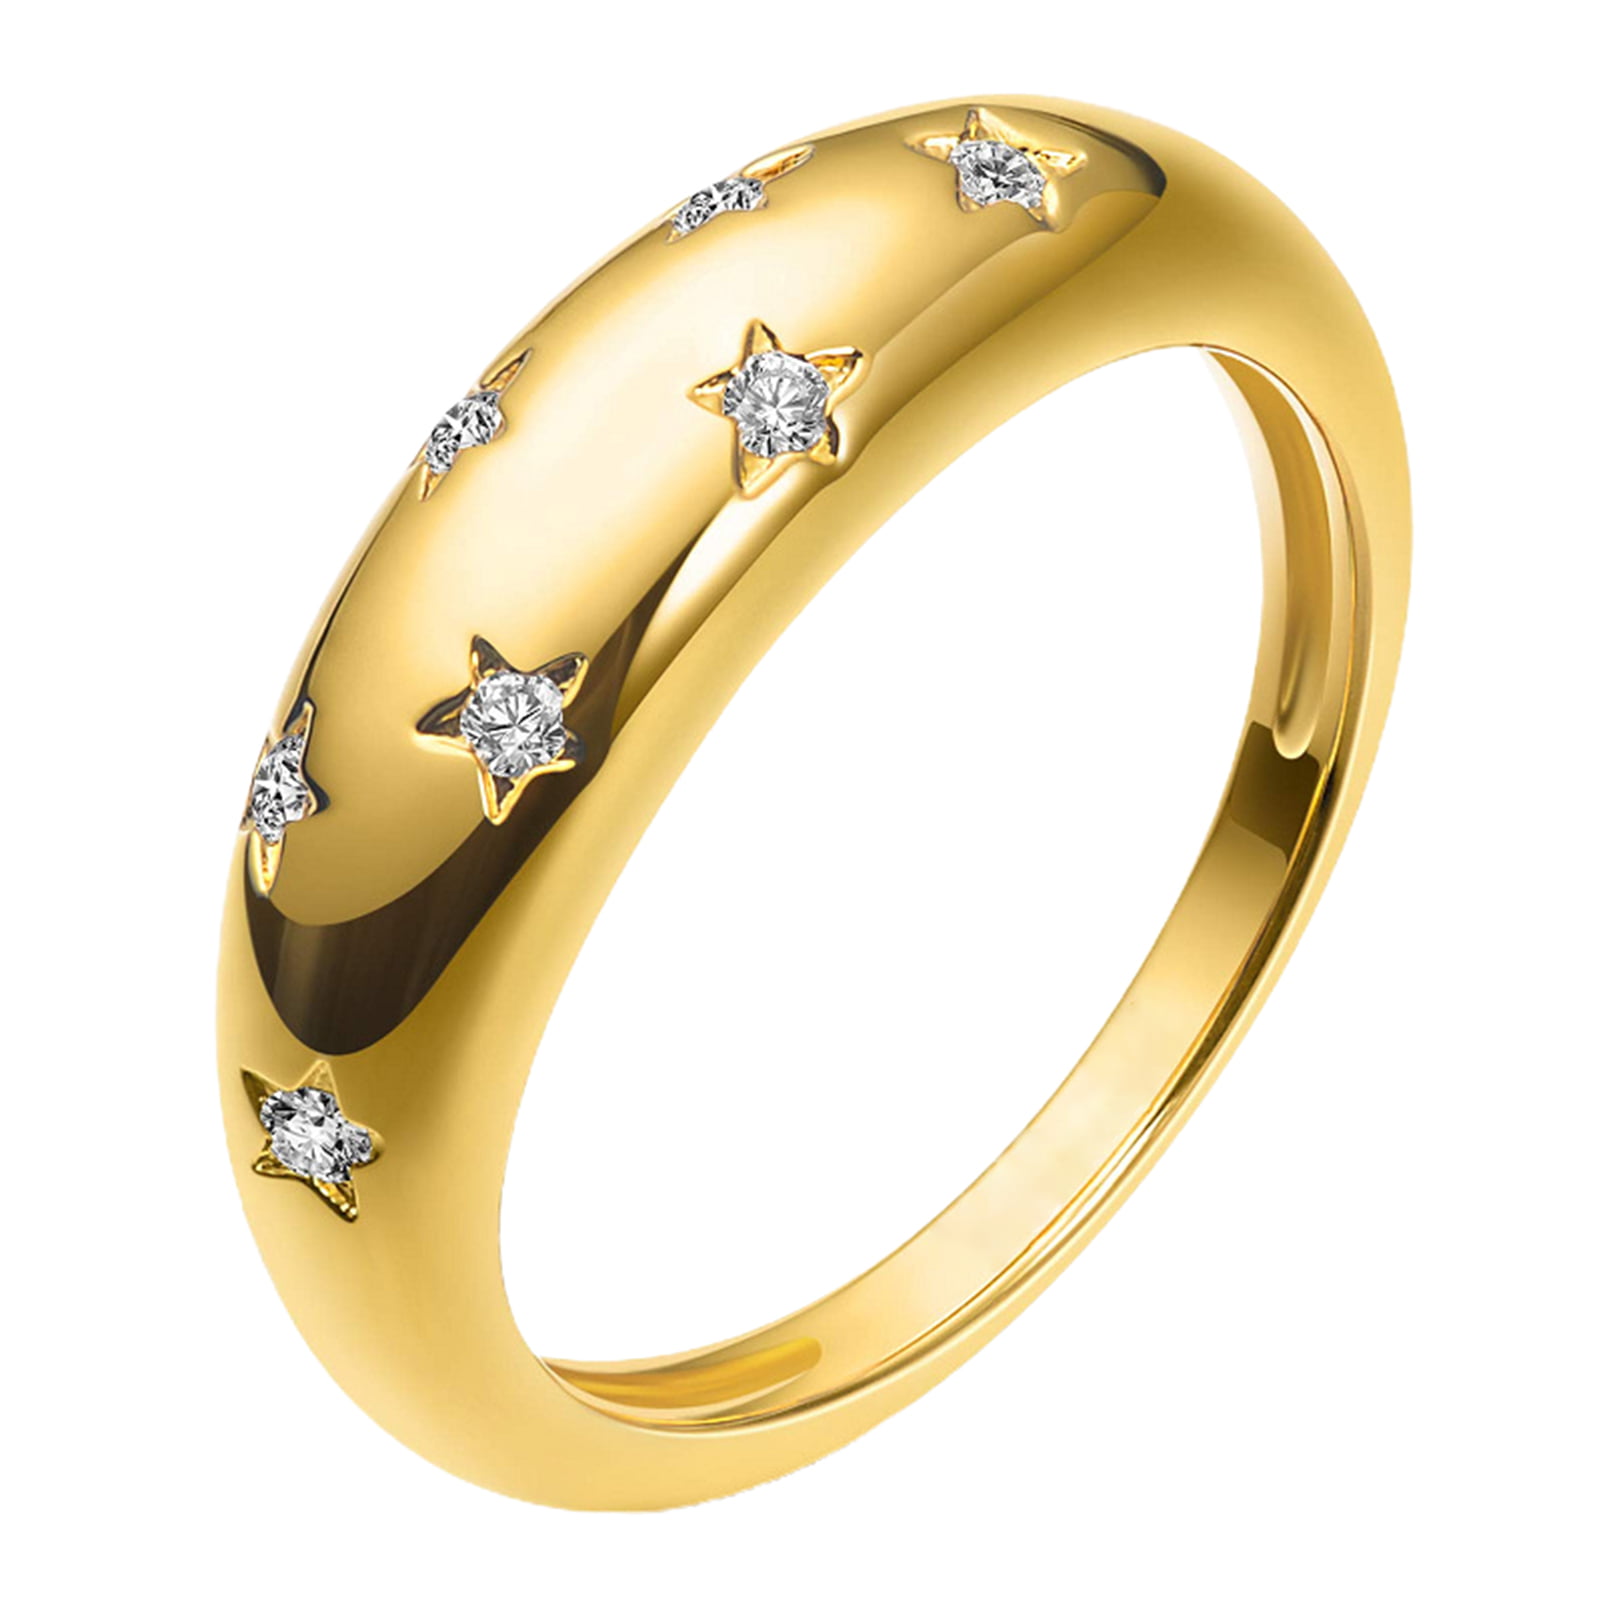 Buy New Model Bridal Wear Gold Ring Design Light Weight Long Ring for  Wedding